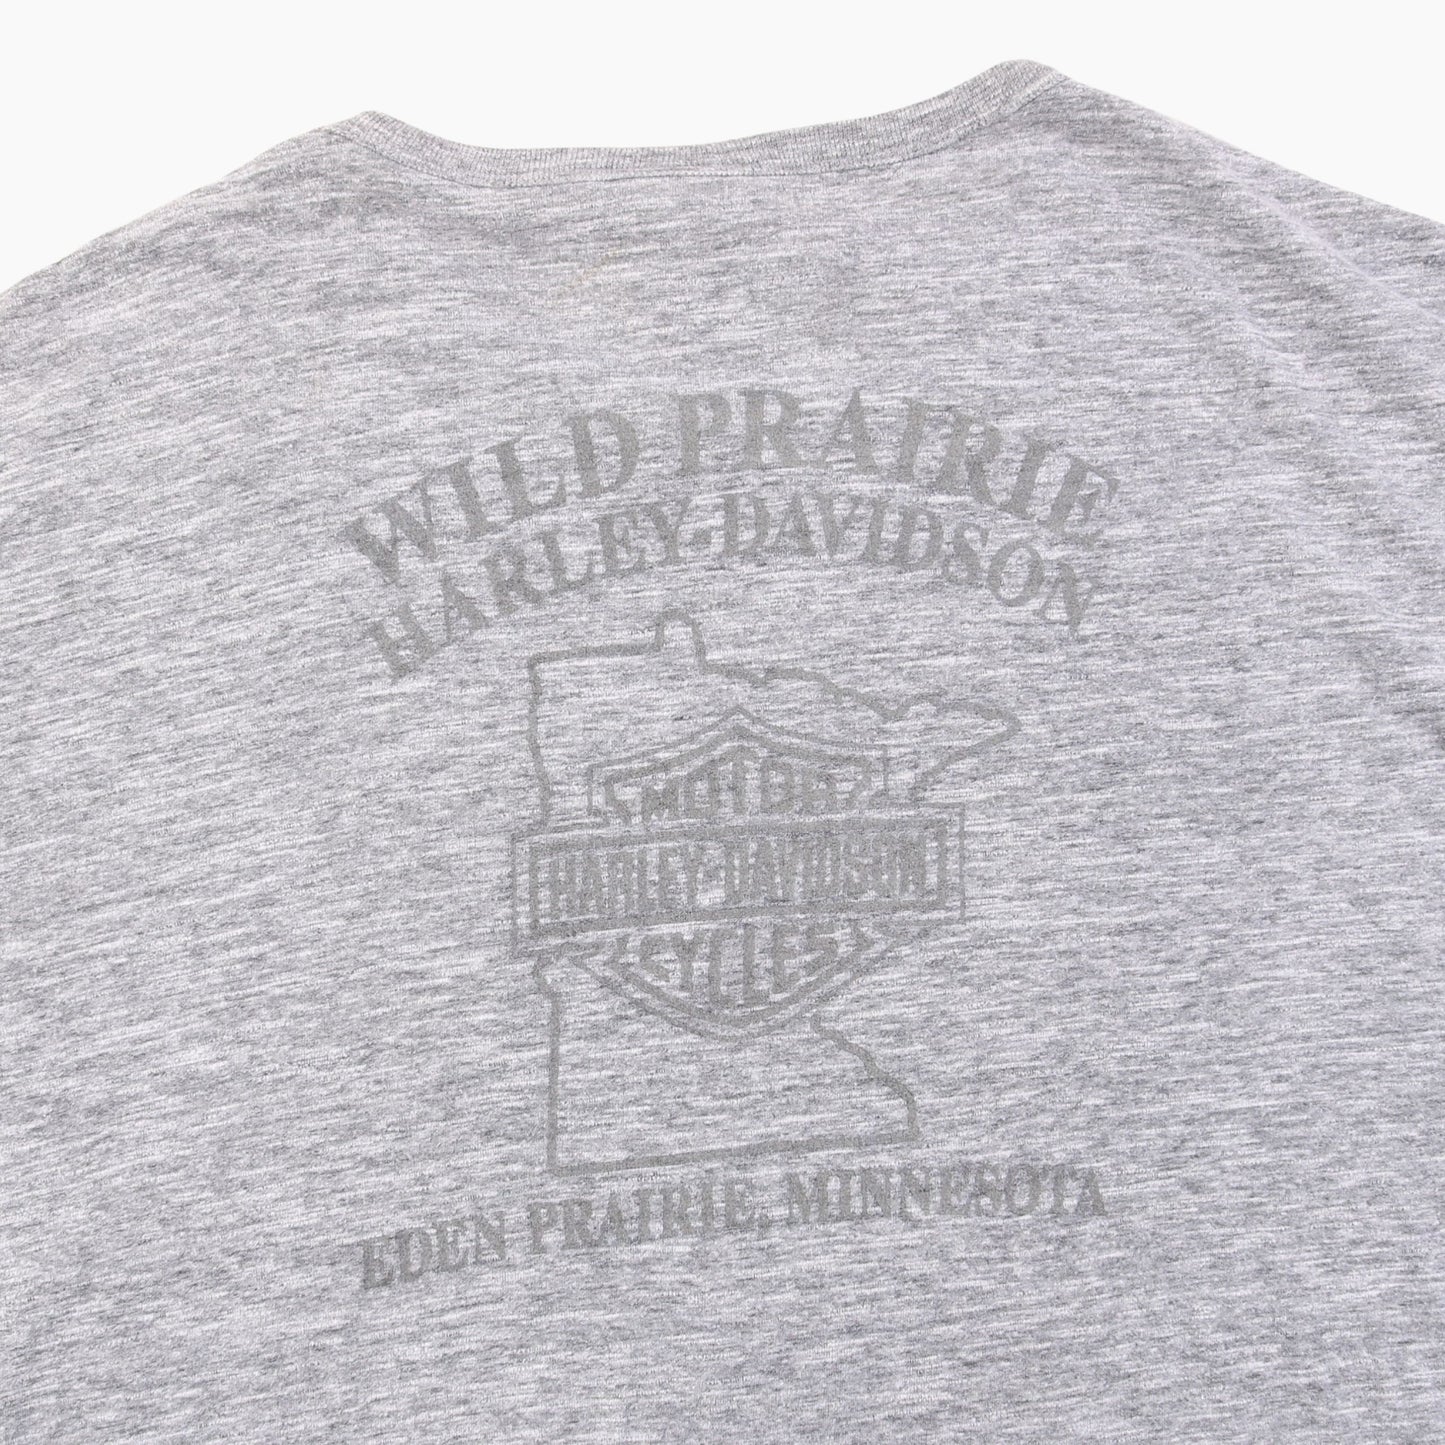 'Wild Prairie Minnesota' T-Shirt - American Madness